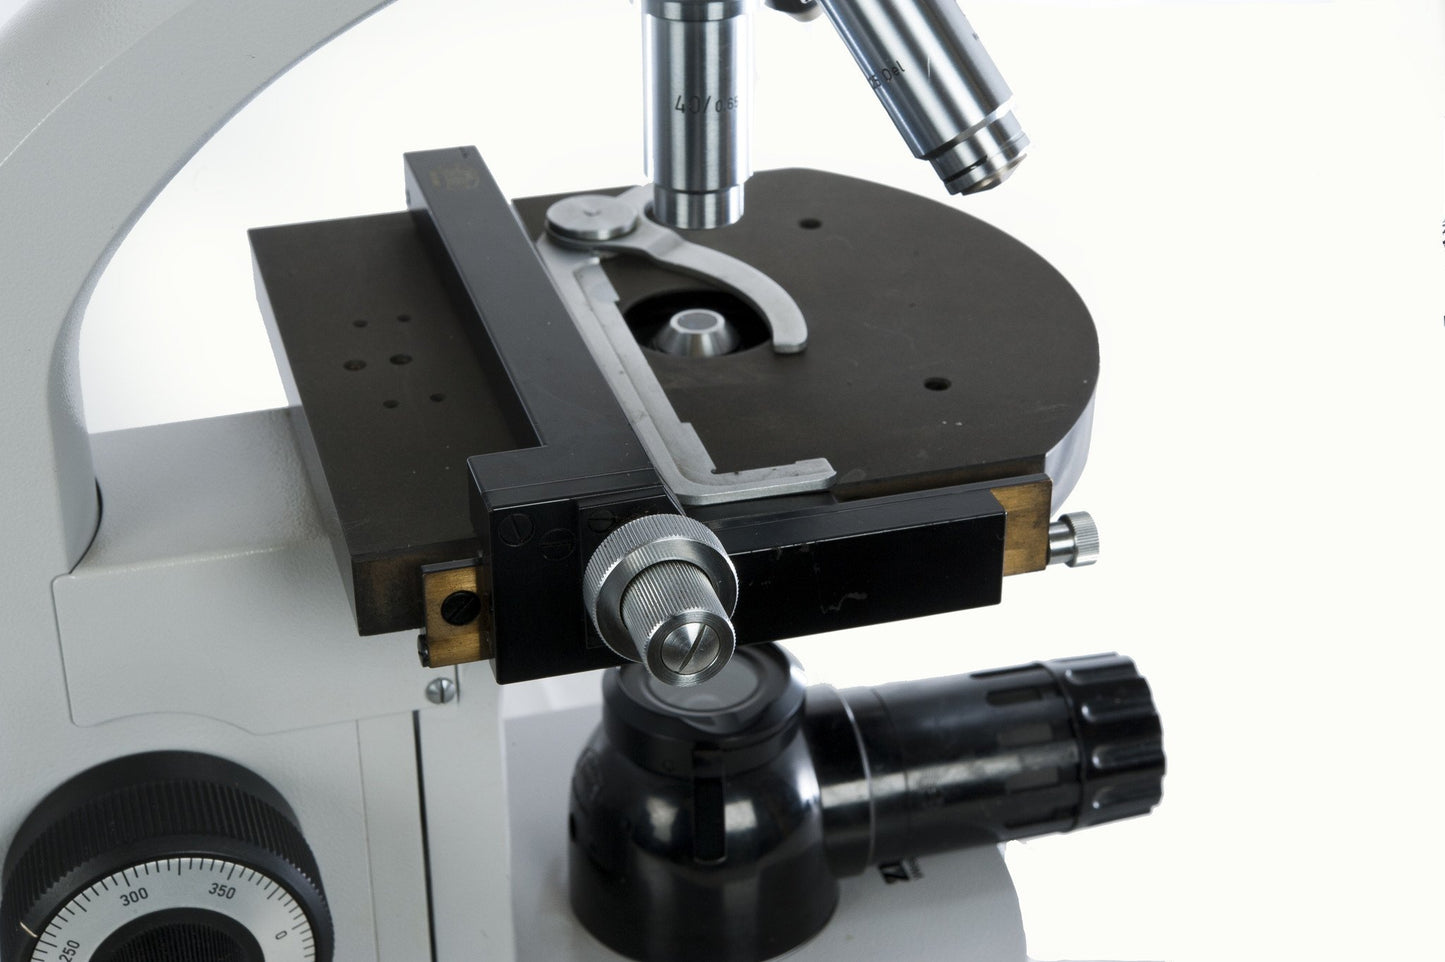 Carl Zeiss Standard Binocular Microscope - Microscope Central
 - 6